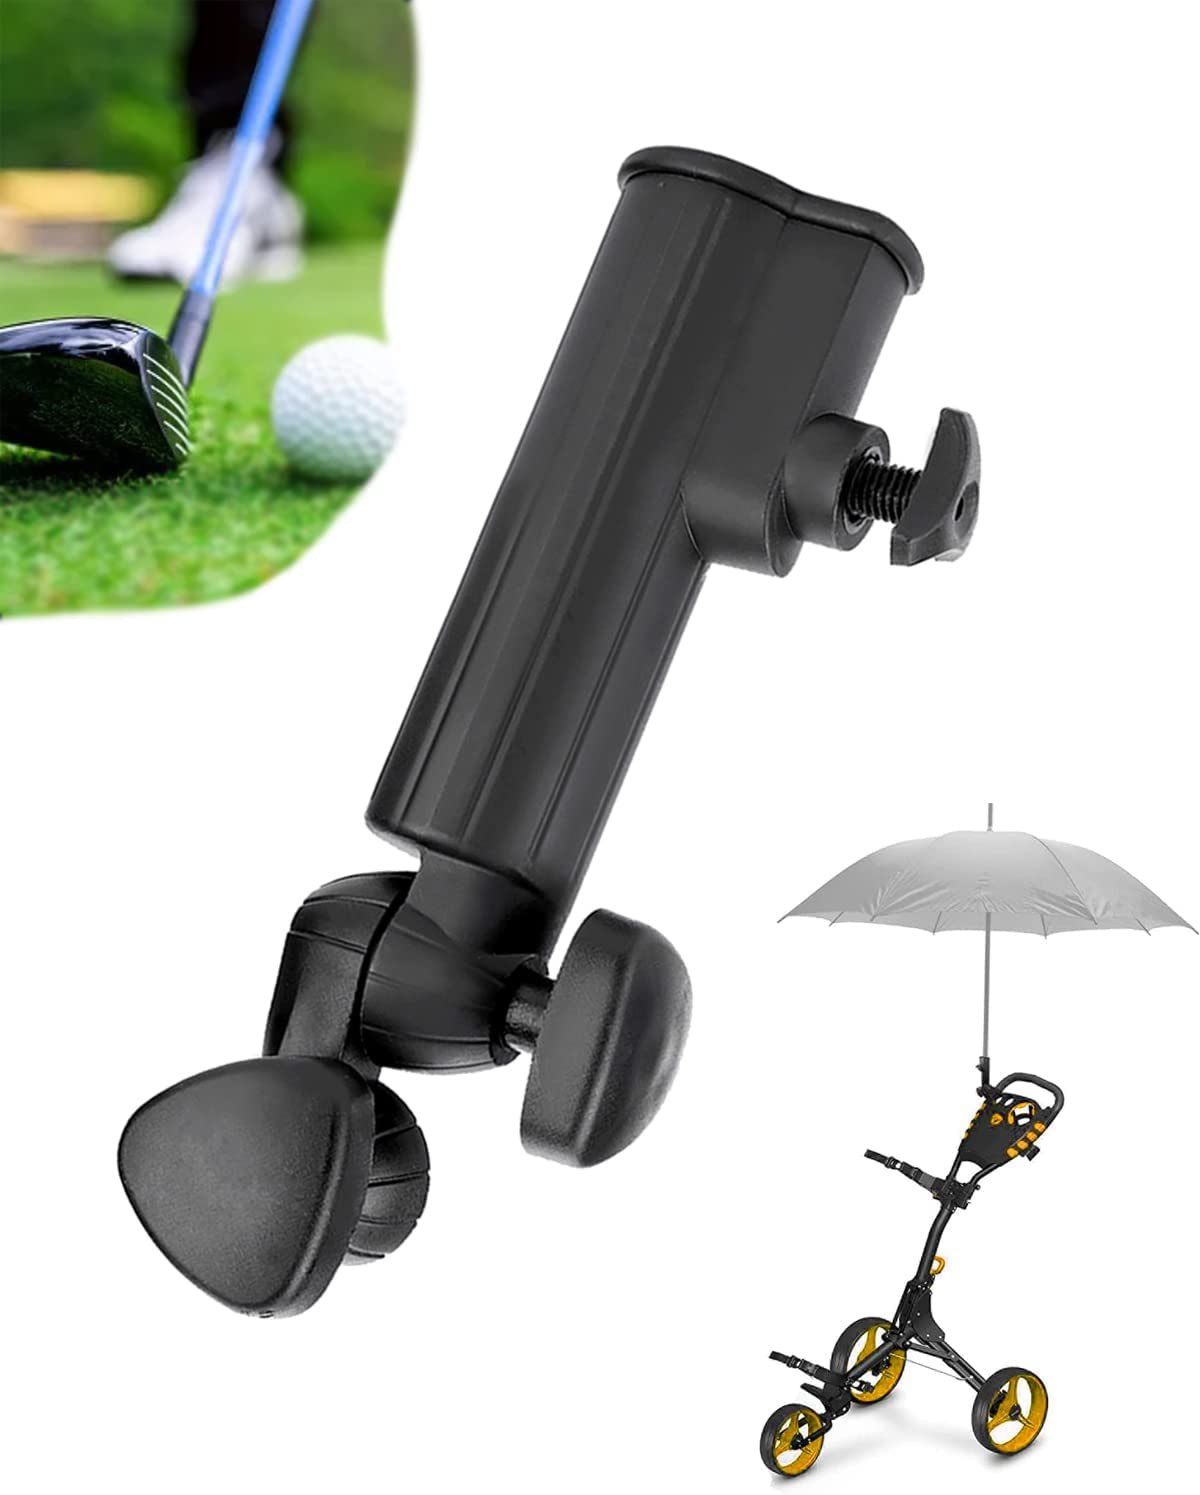 CYCFMYYLY Umbrella Stand, Golf Umbrella Holder, Golf Umbrella Holder for Trolley, Adjustable Anti-Fall Black Umbrella Stand Attachment Deluxe Cart Umbrella Holder for Golf Push Cart Handles